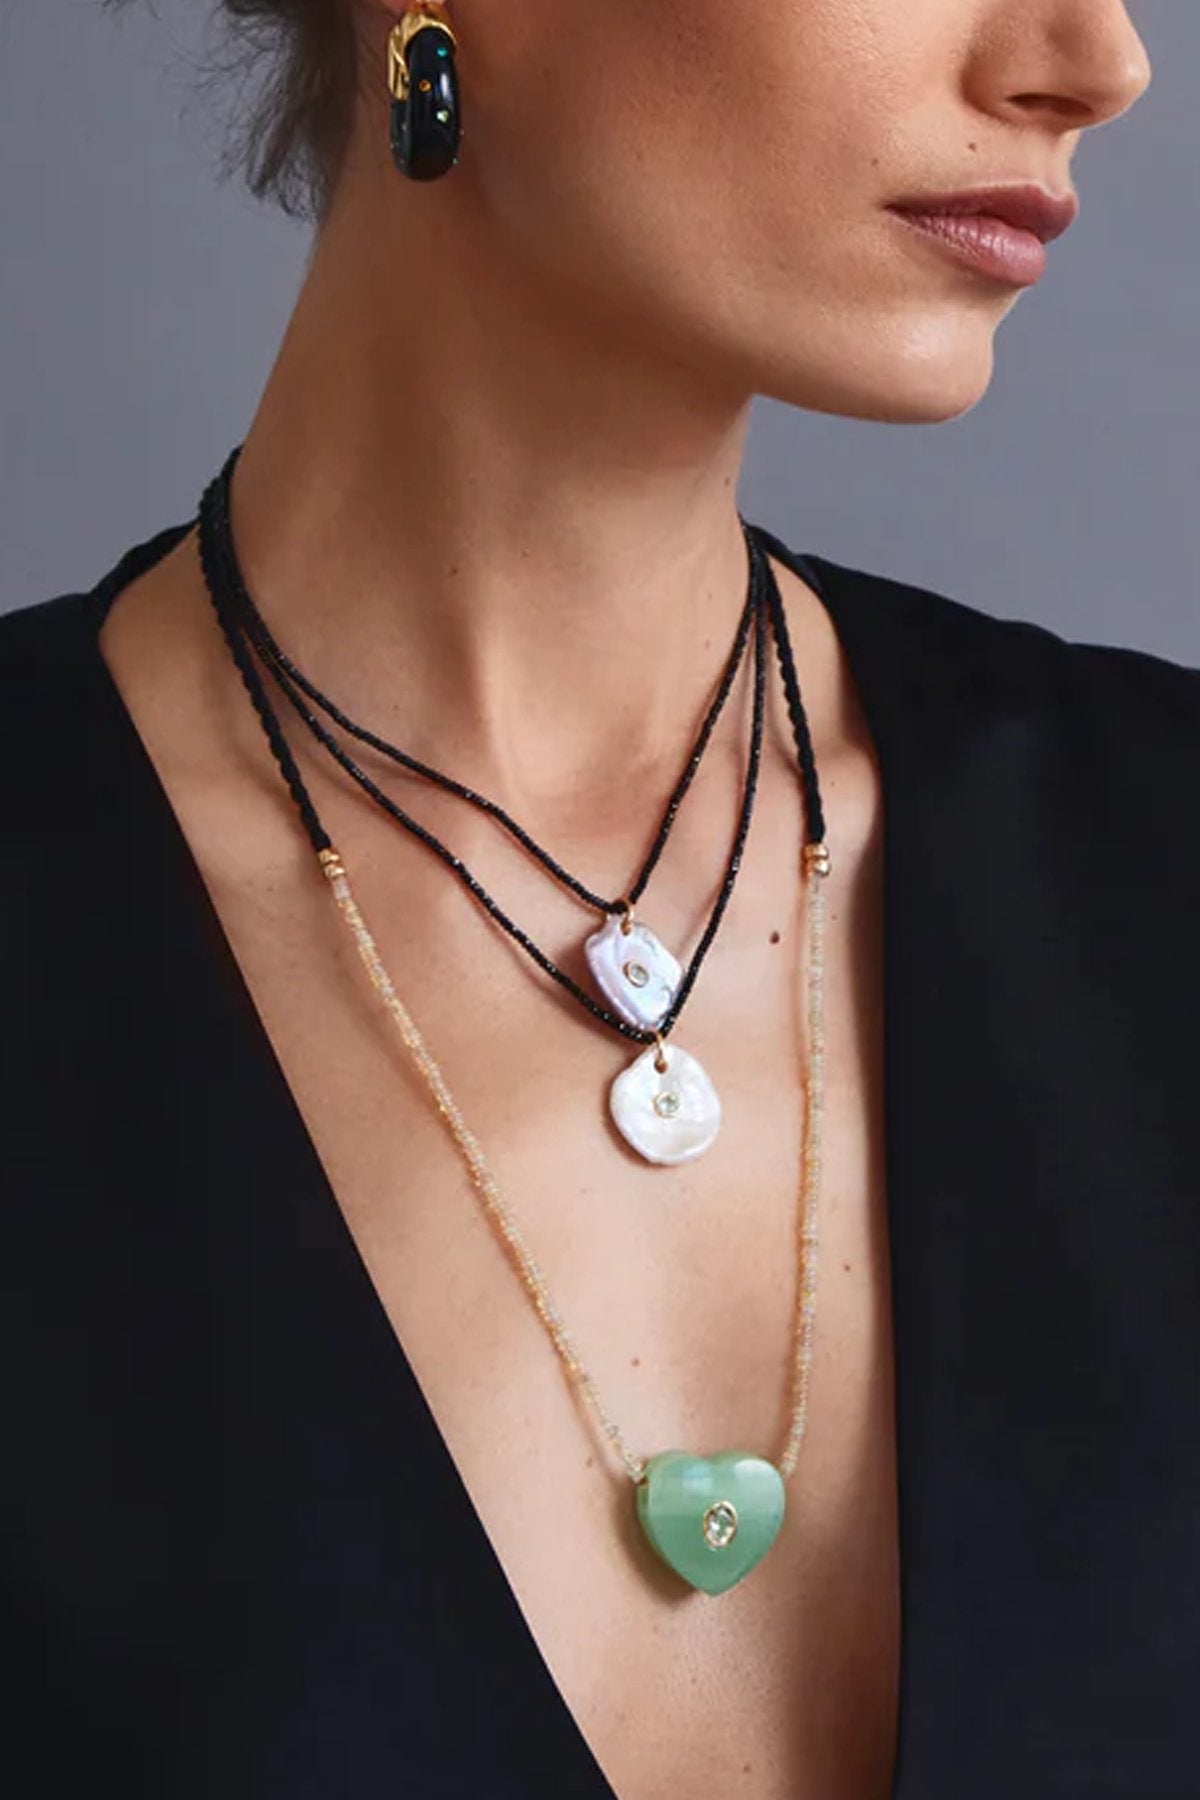 Gemini Necklace in Mint - shop-olivia.com